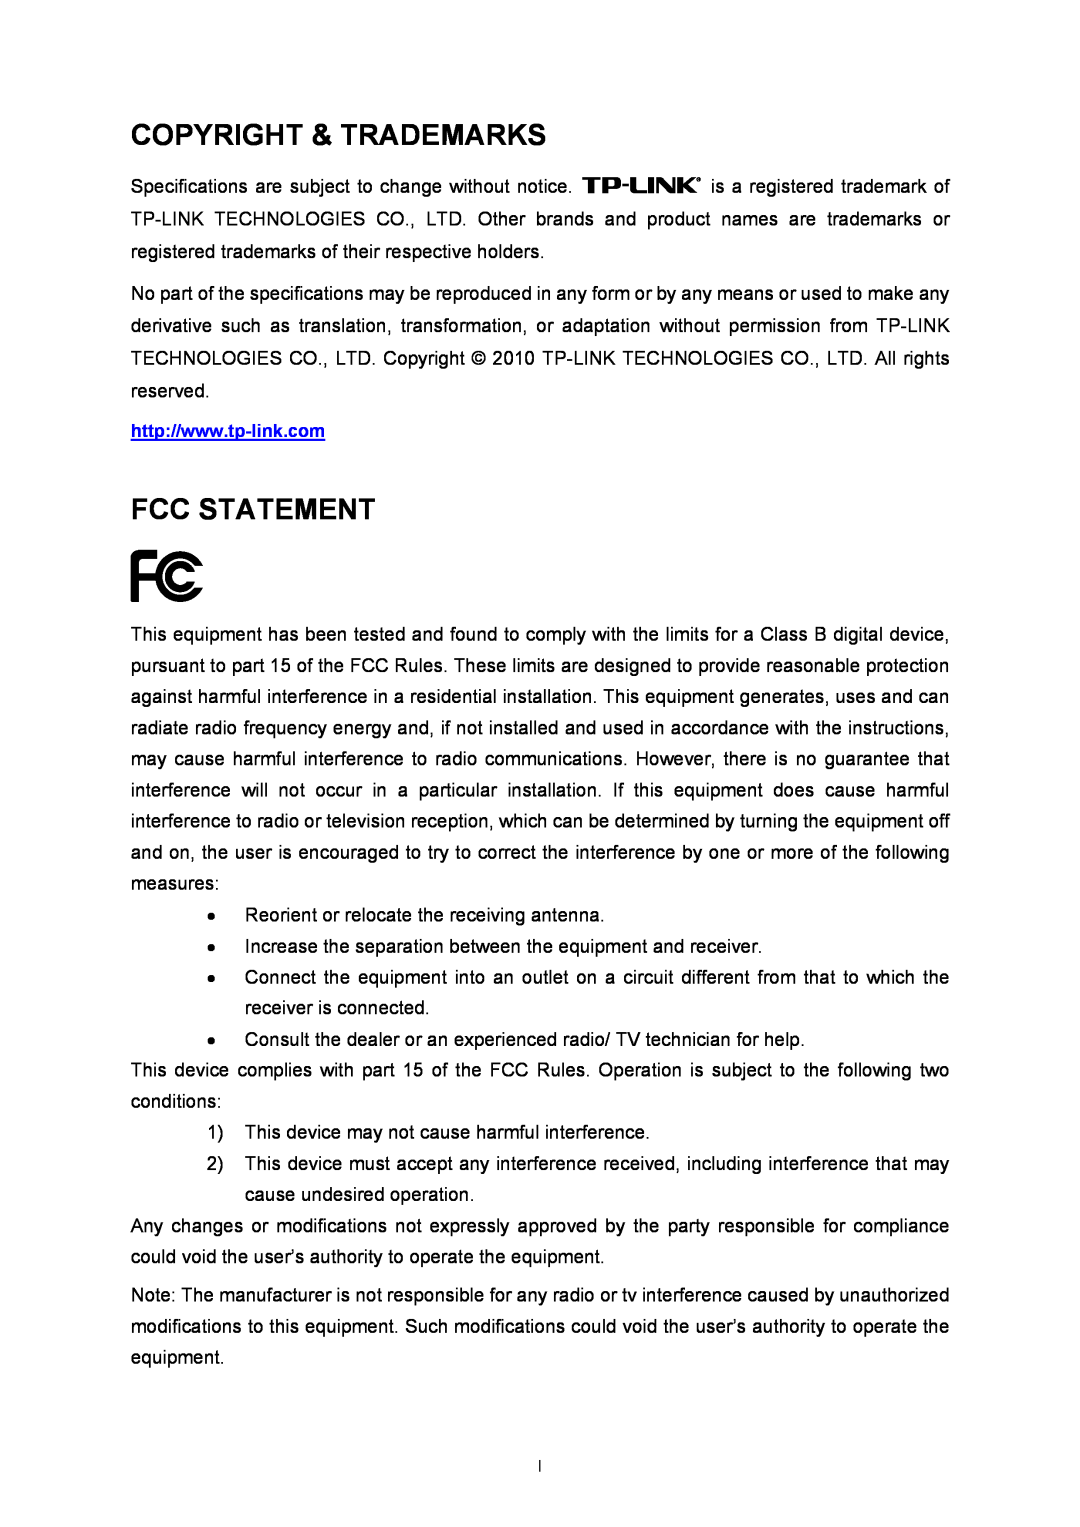 TP-Link TL-WN7200N manual Copyright & Trademarks, Fcc Statement 